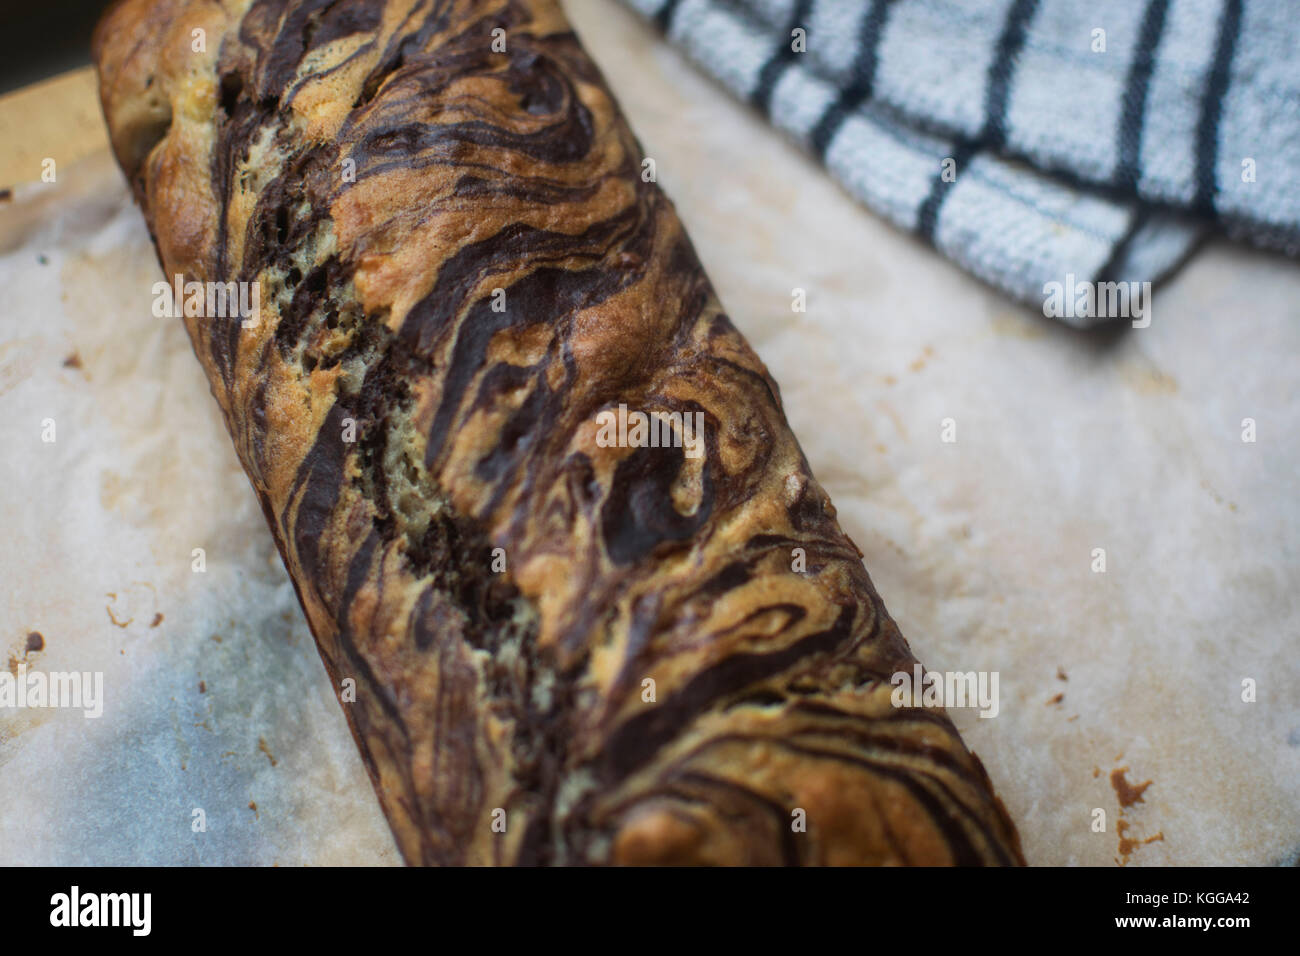 Marbled, vegan banana bread. Harriet Baggley : November 2017 Stock Photo